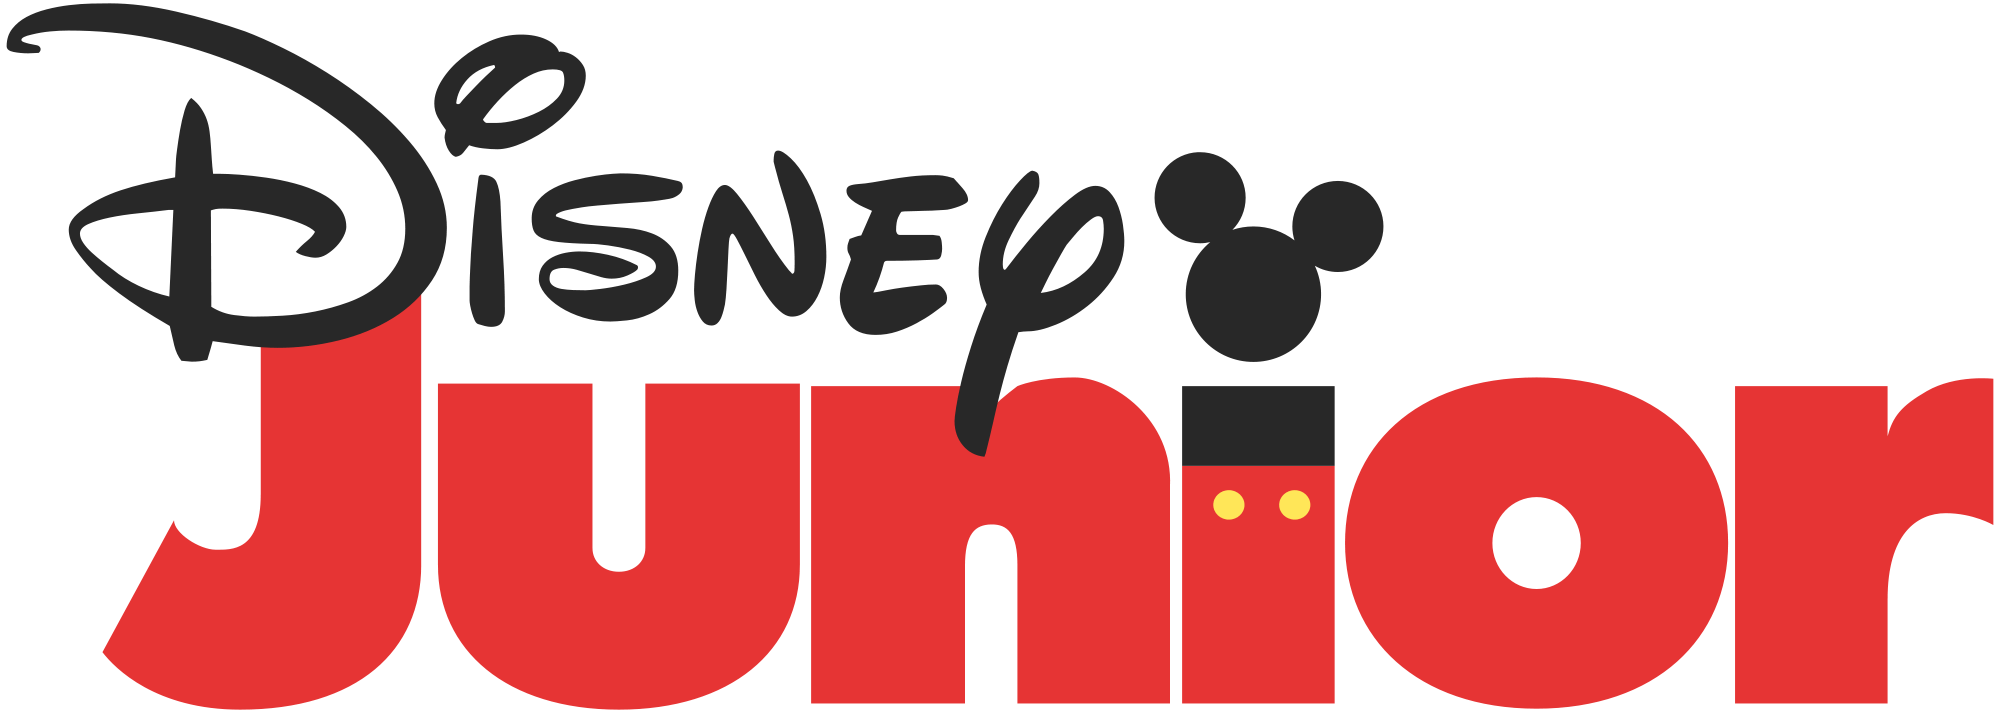 Disney Junior Logo - Disney Junior | 迪斯尼 | Disney junior, Disney, Logos